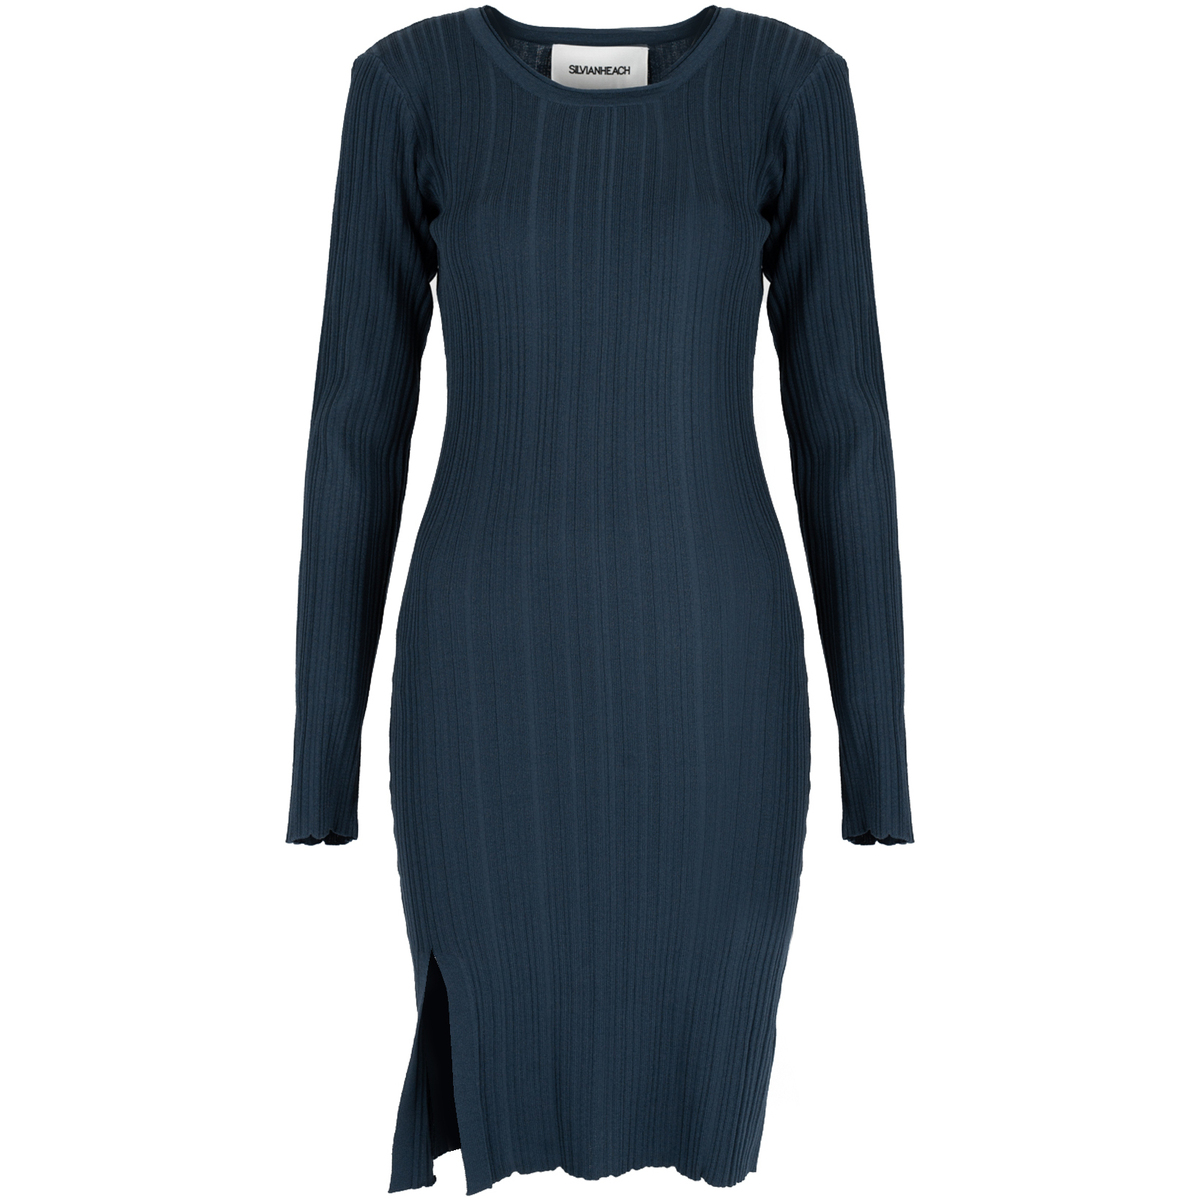 Textiel Dames Korte jurken Silvian Heach GPP23253VE Blauw